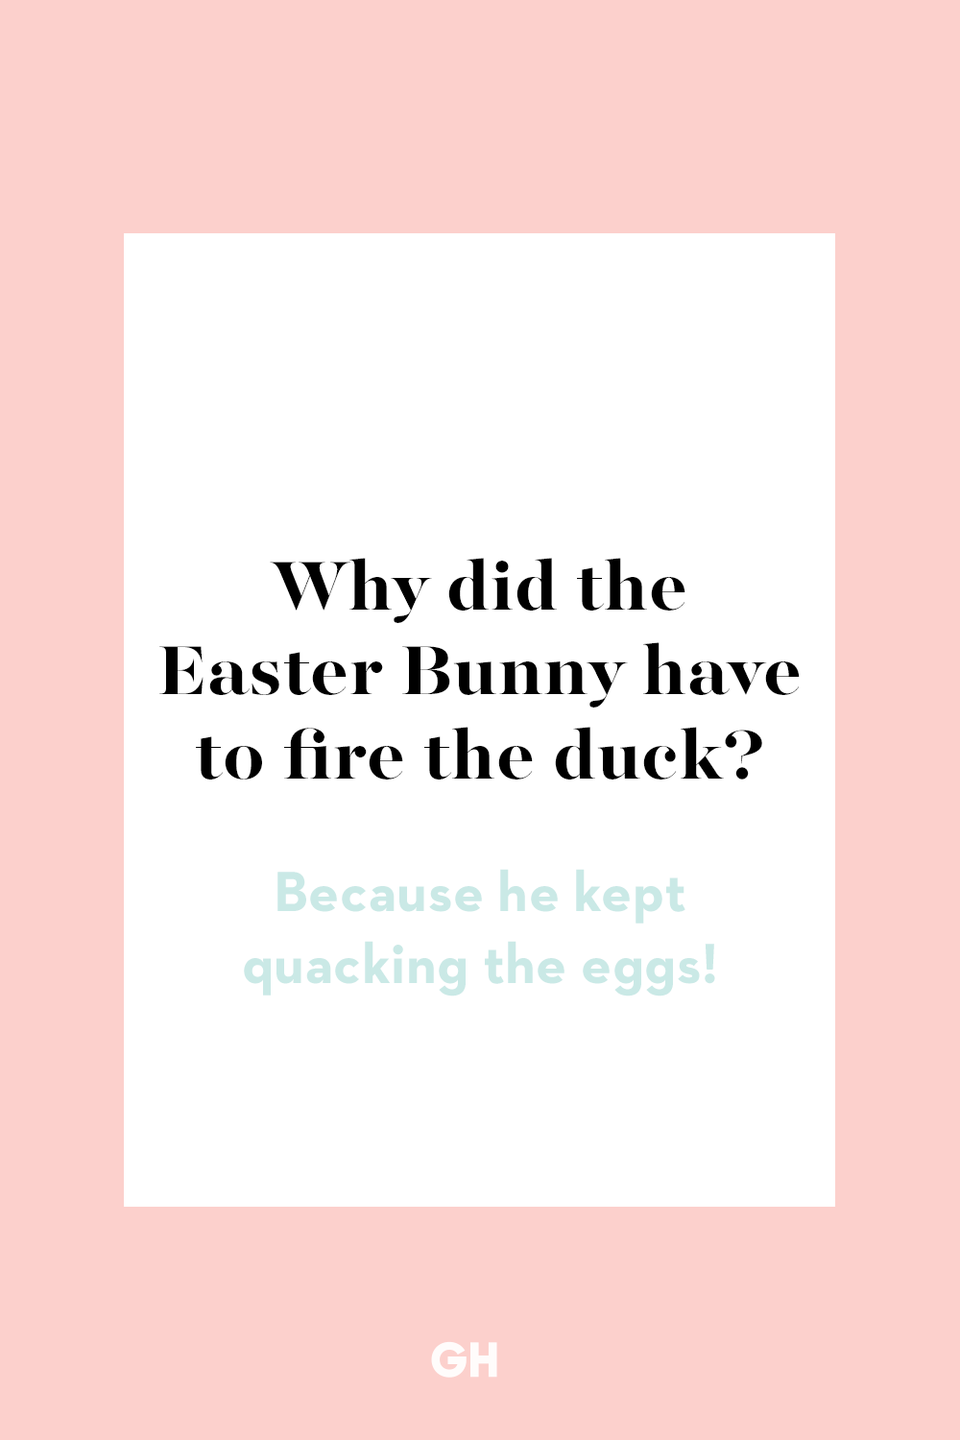 <p>Because he kept quacking the eggs!</p>